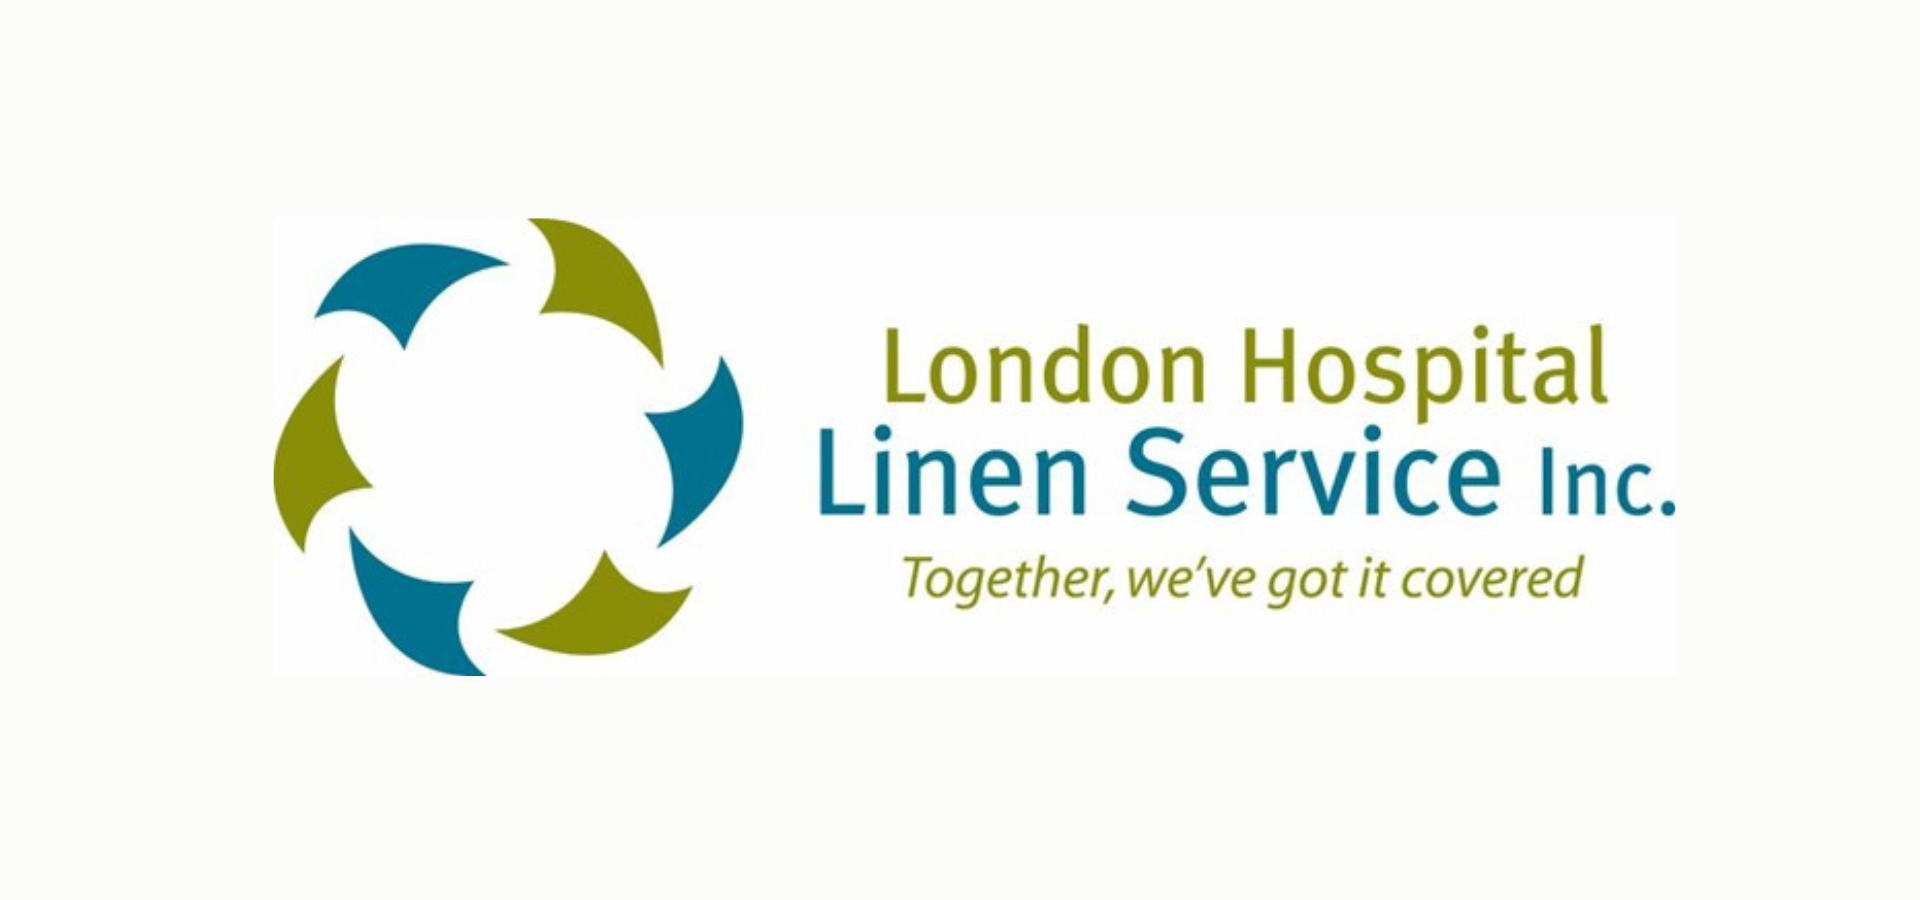 London Hospital Linen Service Inc. JOB FAIR! London Economic